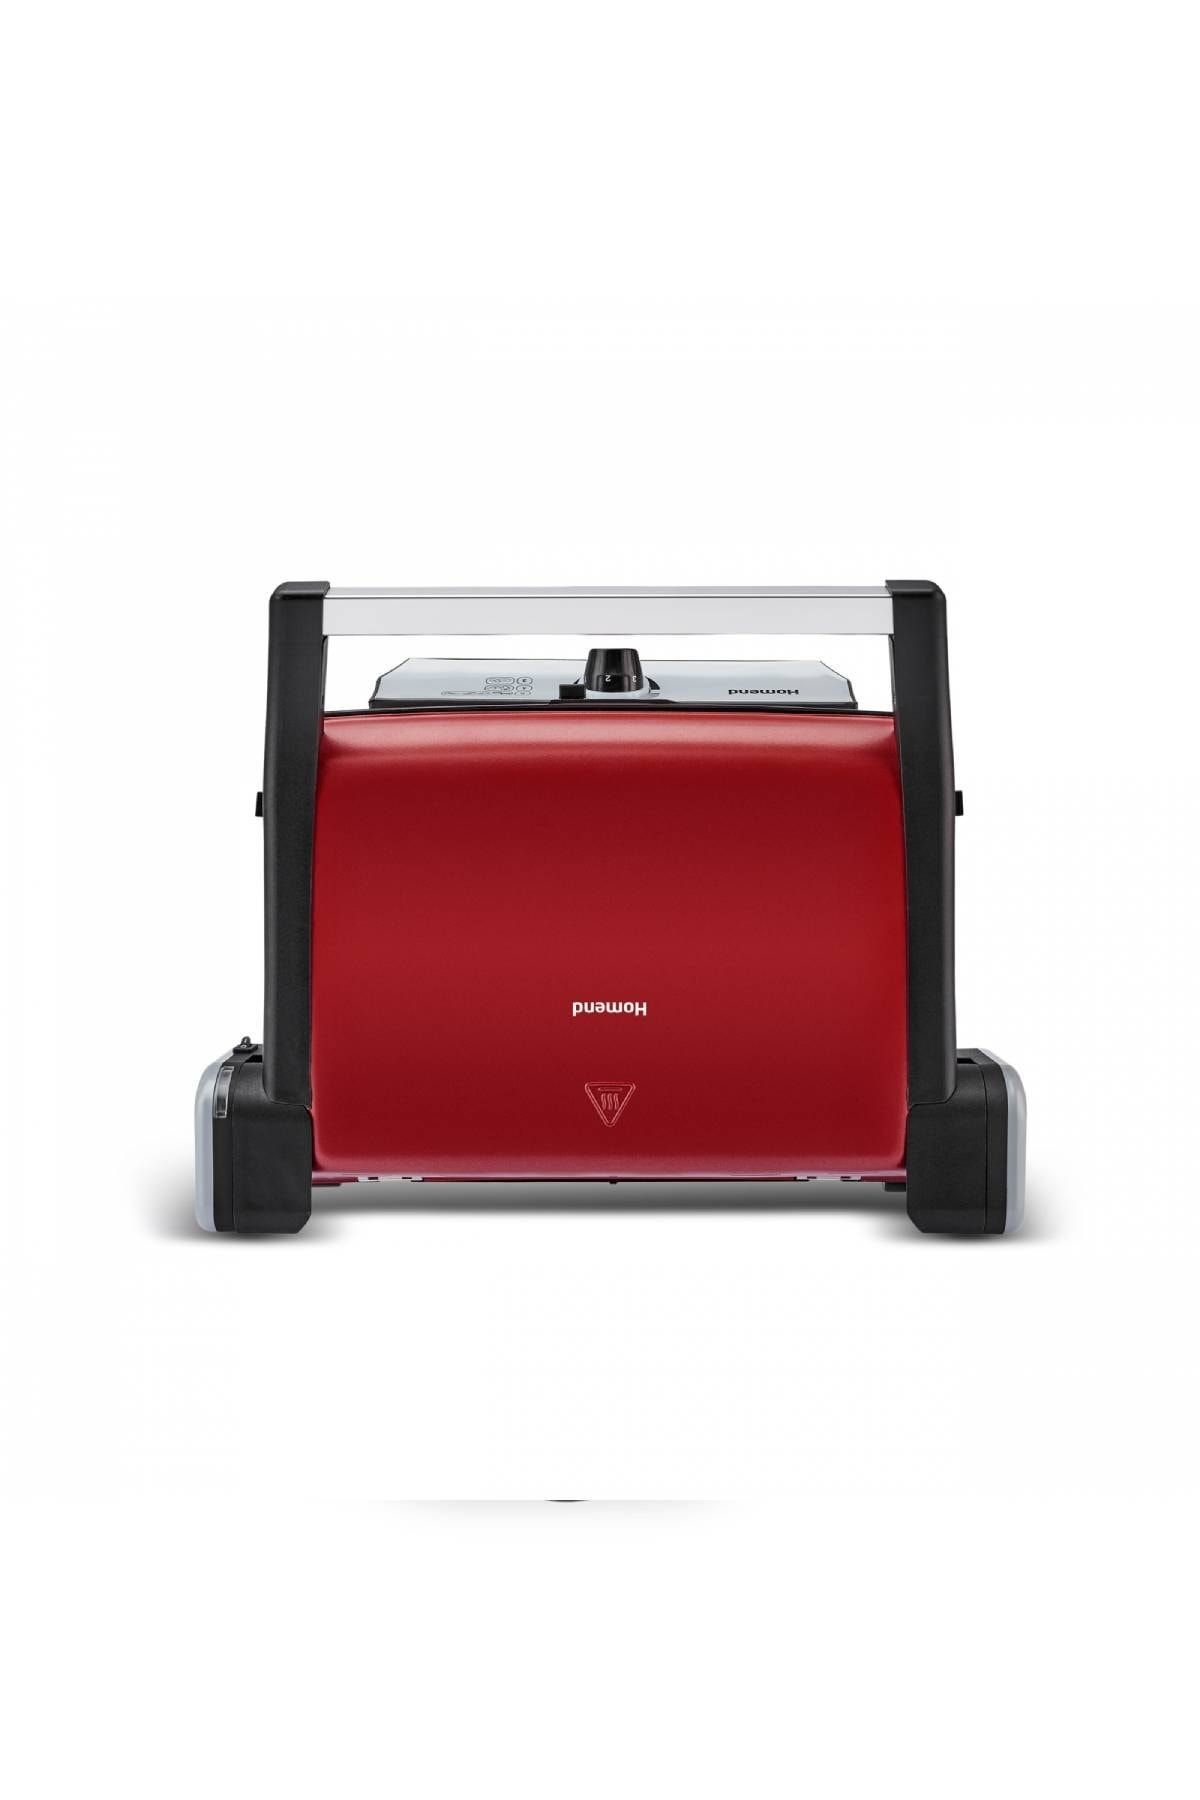 HOMEND Toastbuster 1382h Kırmızı Silver Tost Makinesi